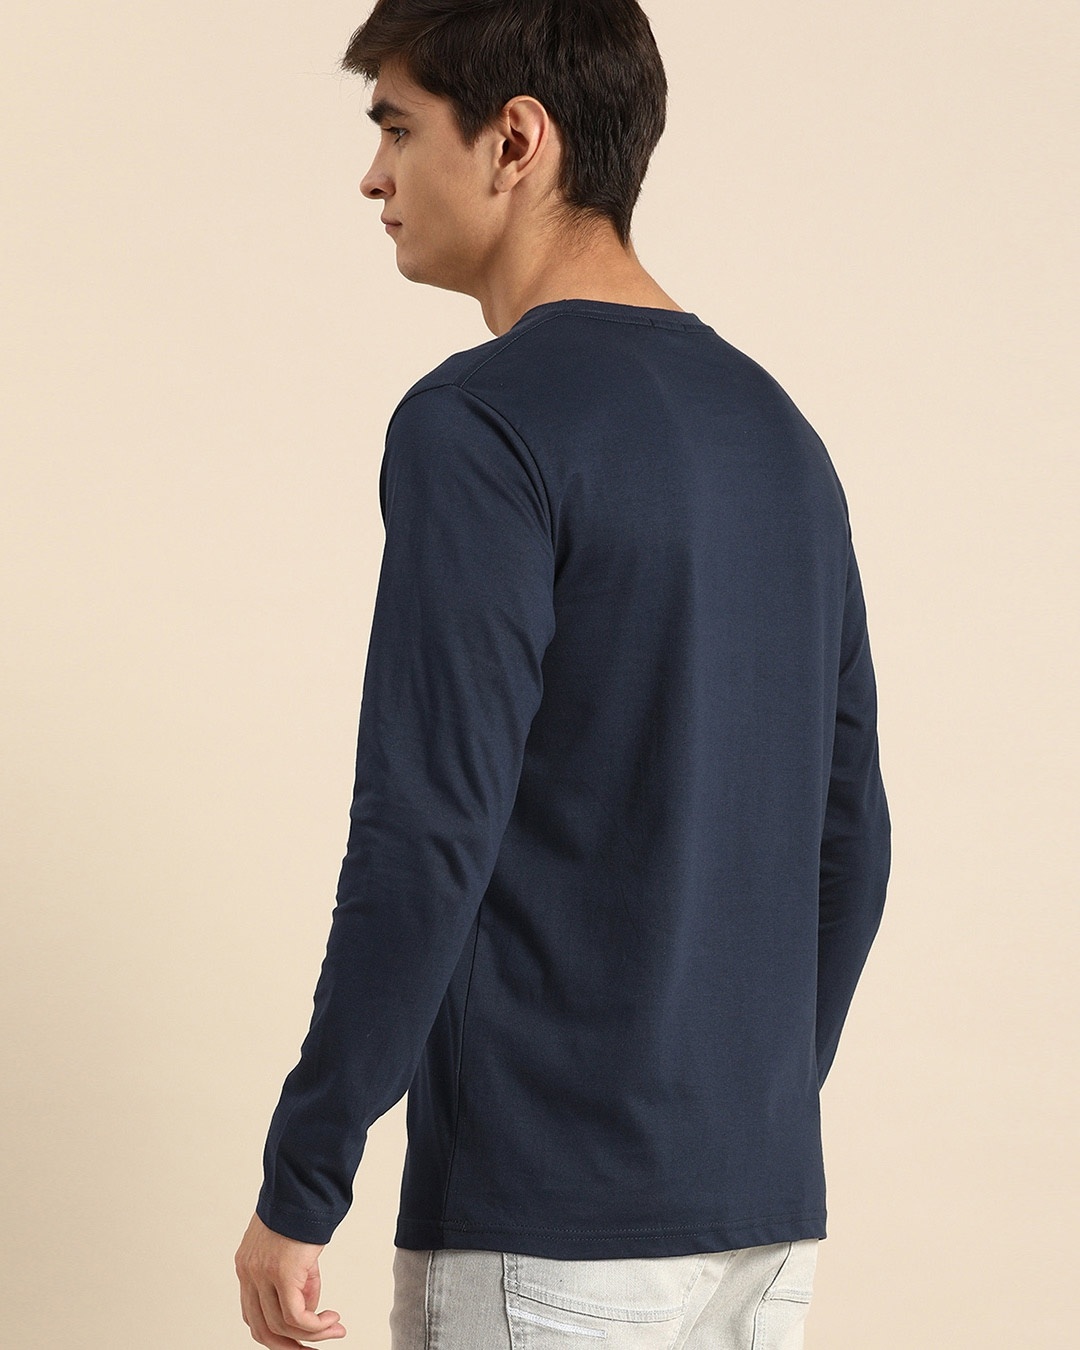 Shop Feel Most Alive Full Sleeve T-Shirt Navy Blue-Design